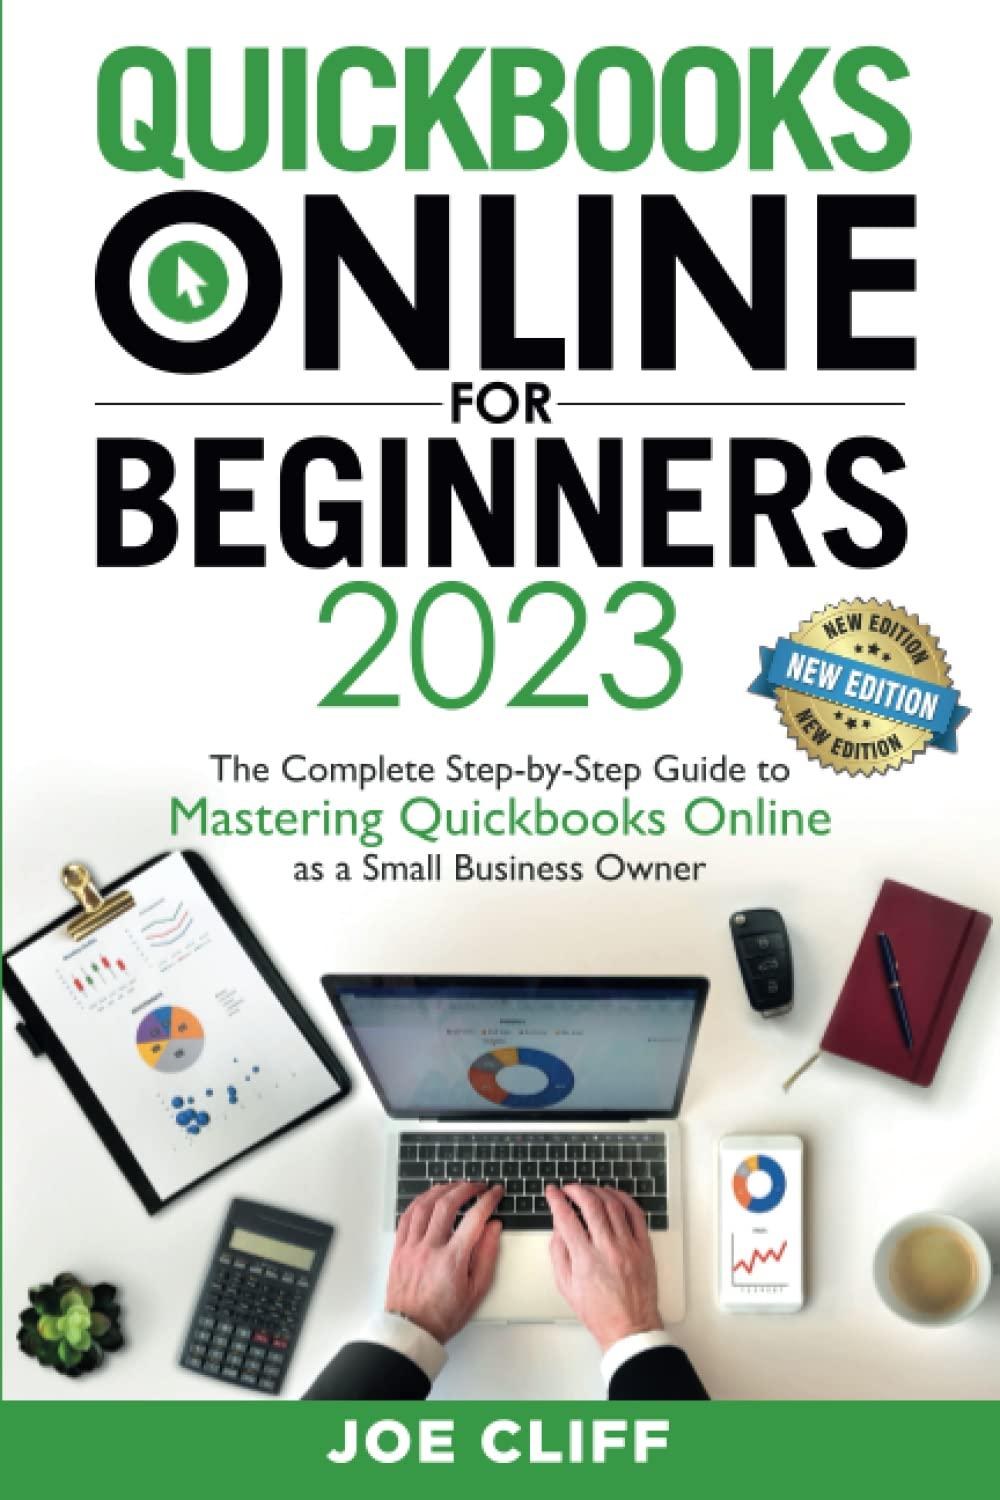 quickbooks online for beginners 2023 1st edition joe cliff 8371225900, 979-8371225900